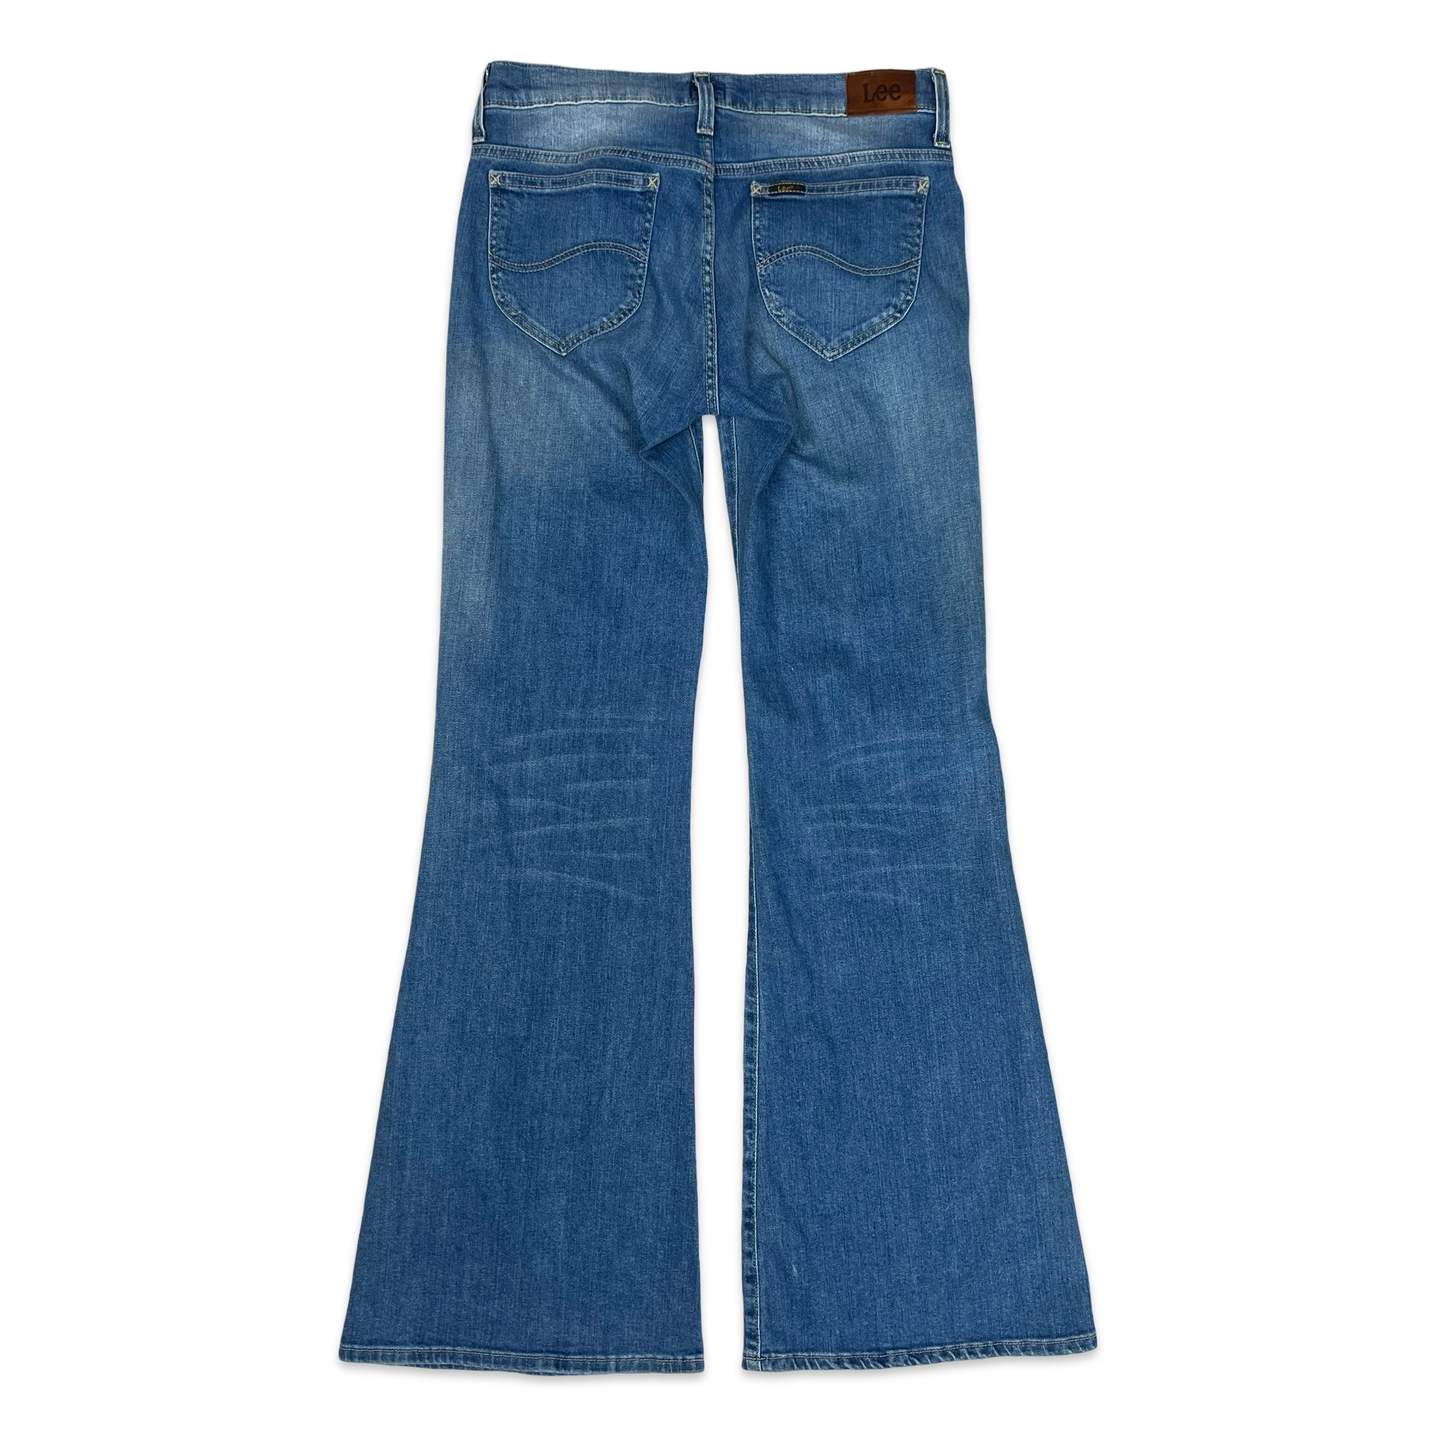 Lee Flared Blue Jeans 10